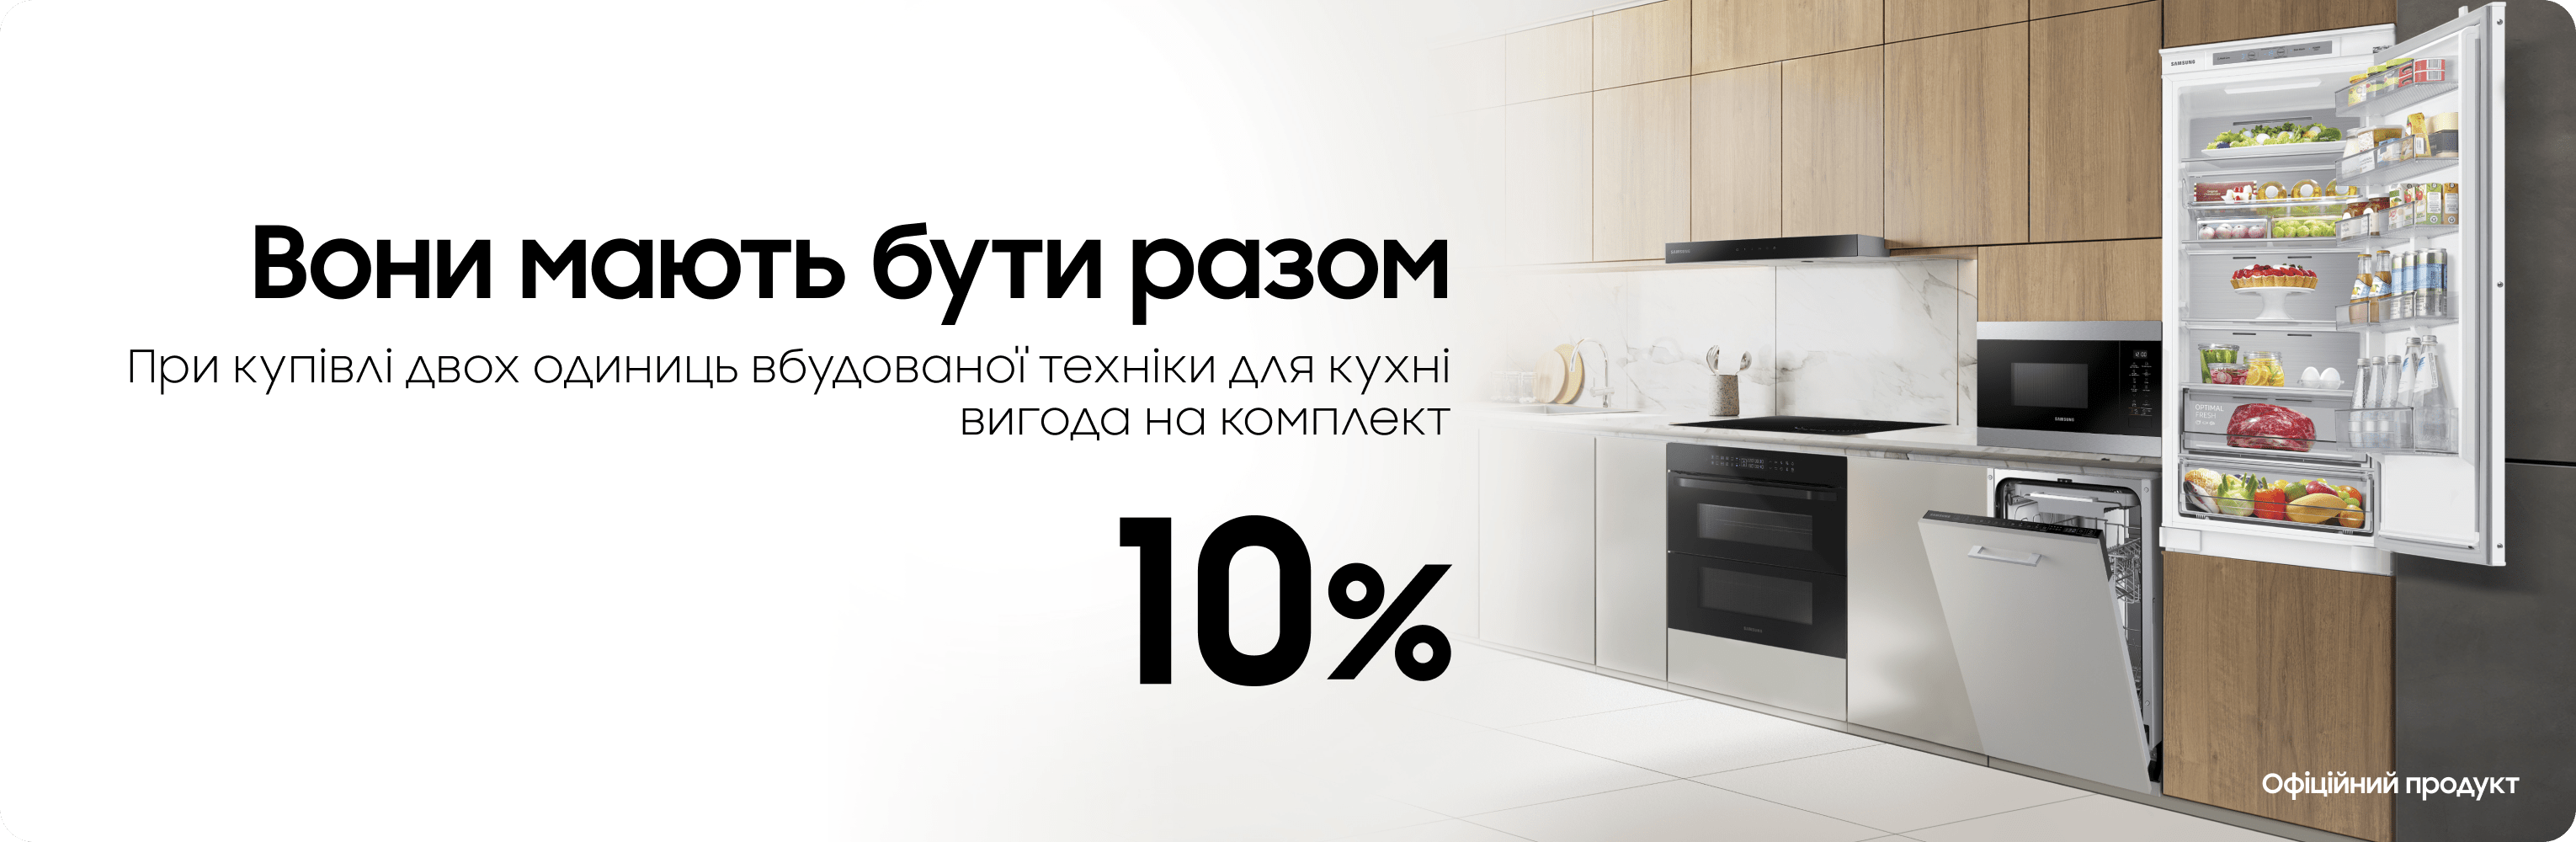 Вигода 10% на комплект духова шафа и микроволновка - samsungshop.com.ua